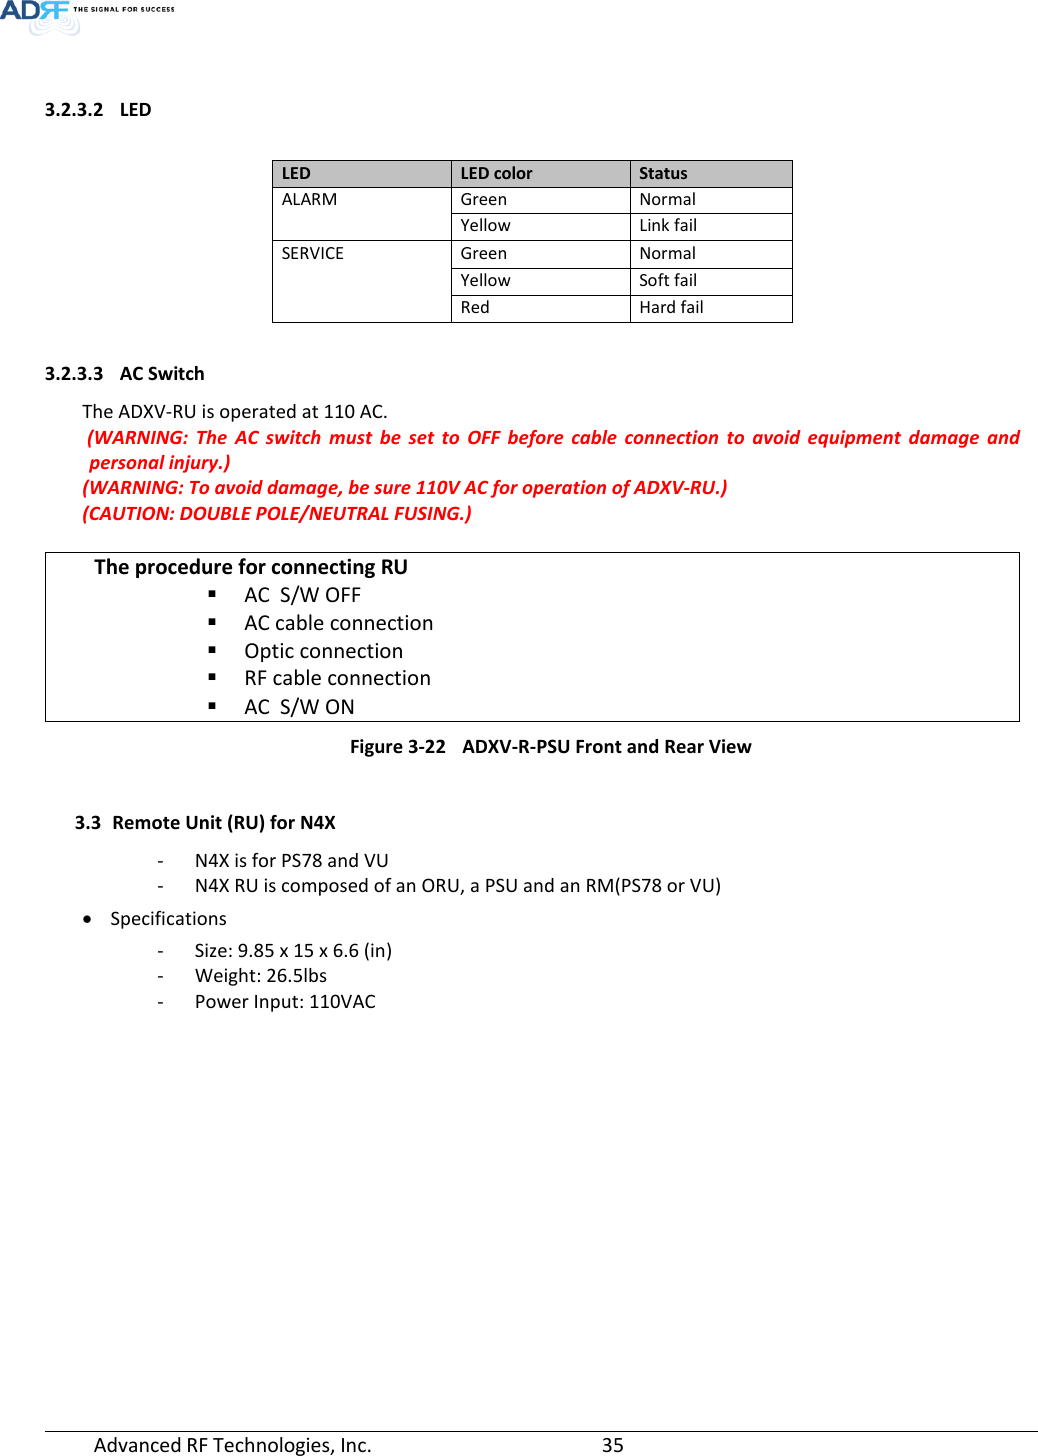 Page 35 of ADRF KOREA ADXV-R-78P-NA DAS (Distributed Antenna System) User Manual ADXV DAS